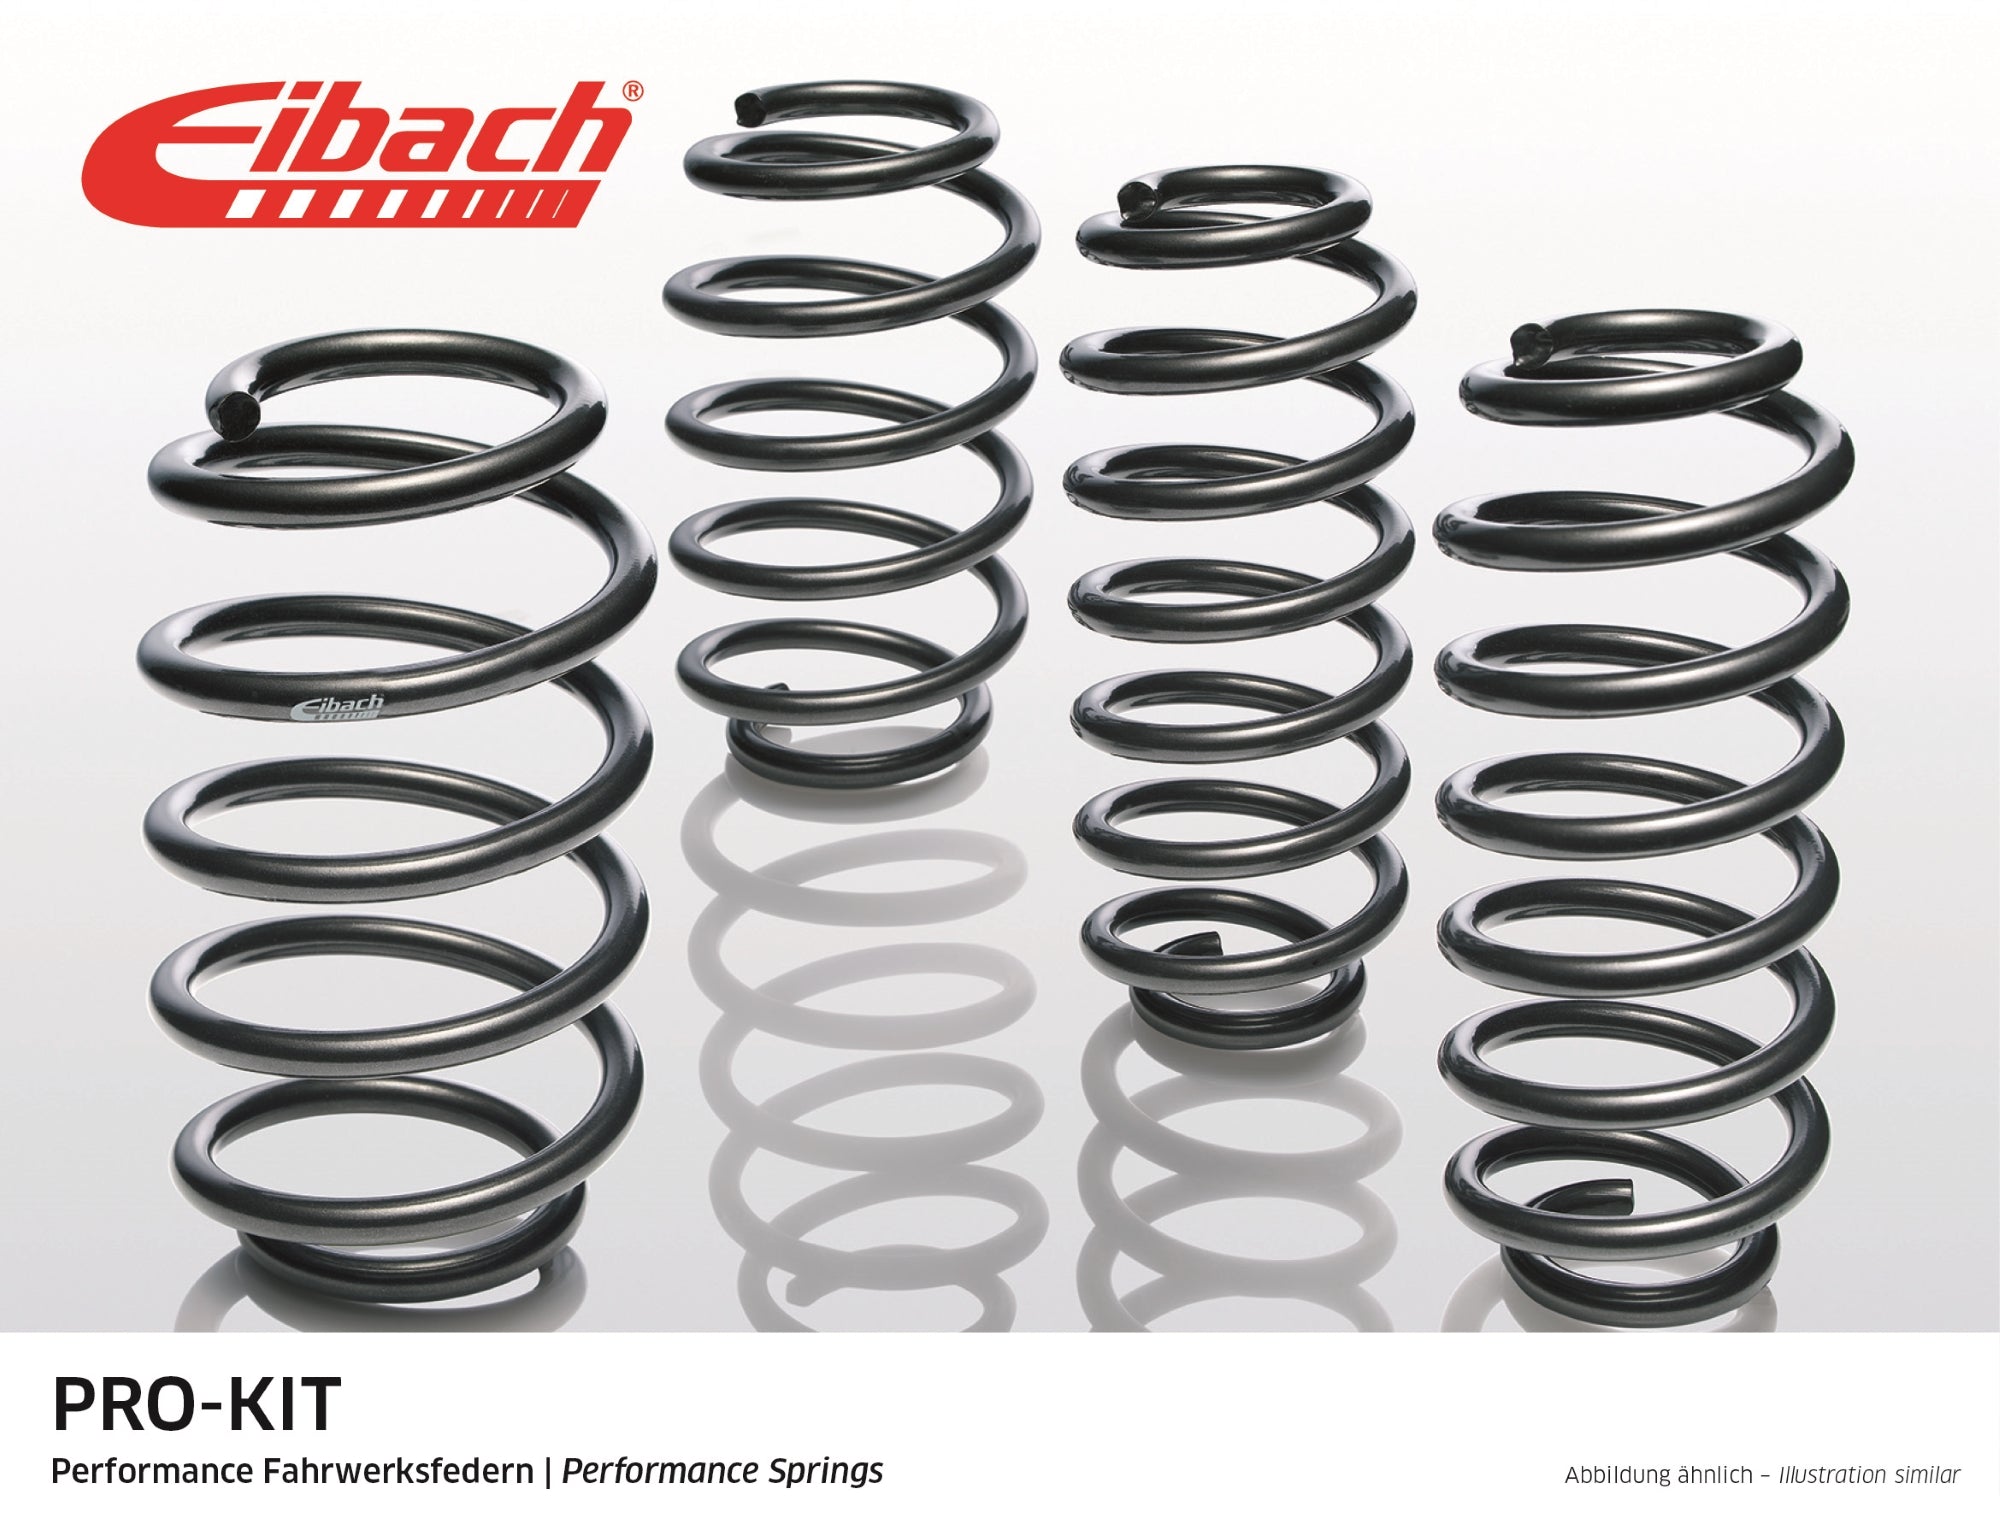 Eibach Suspension Pro-Kit (Performance Springs) Lowering Kit 911 2011-18 #E10-72-012-01-22